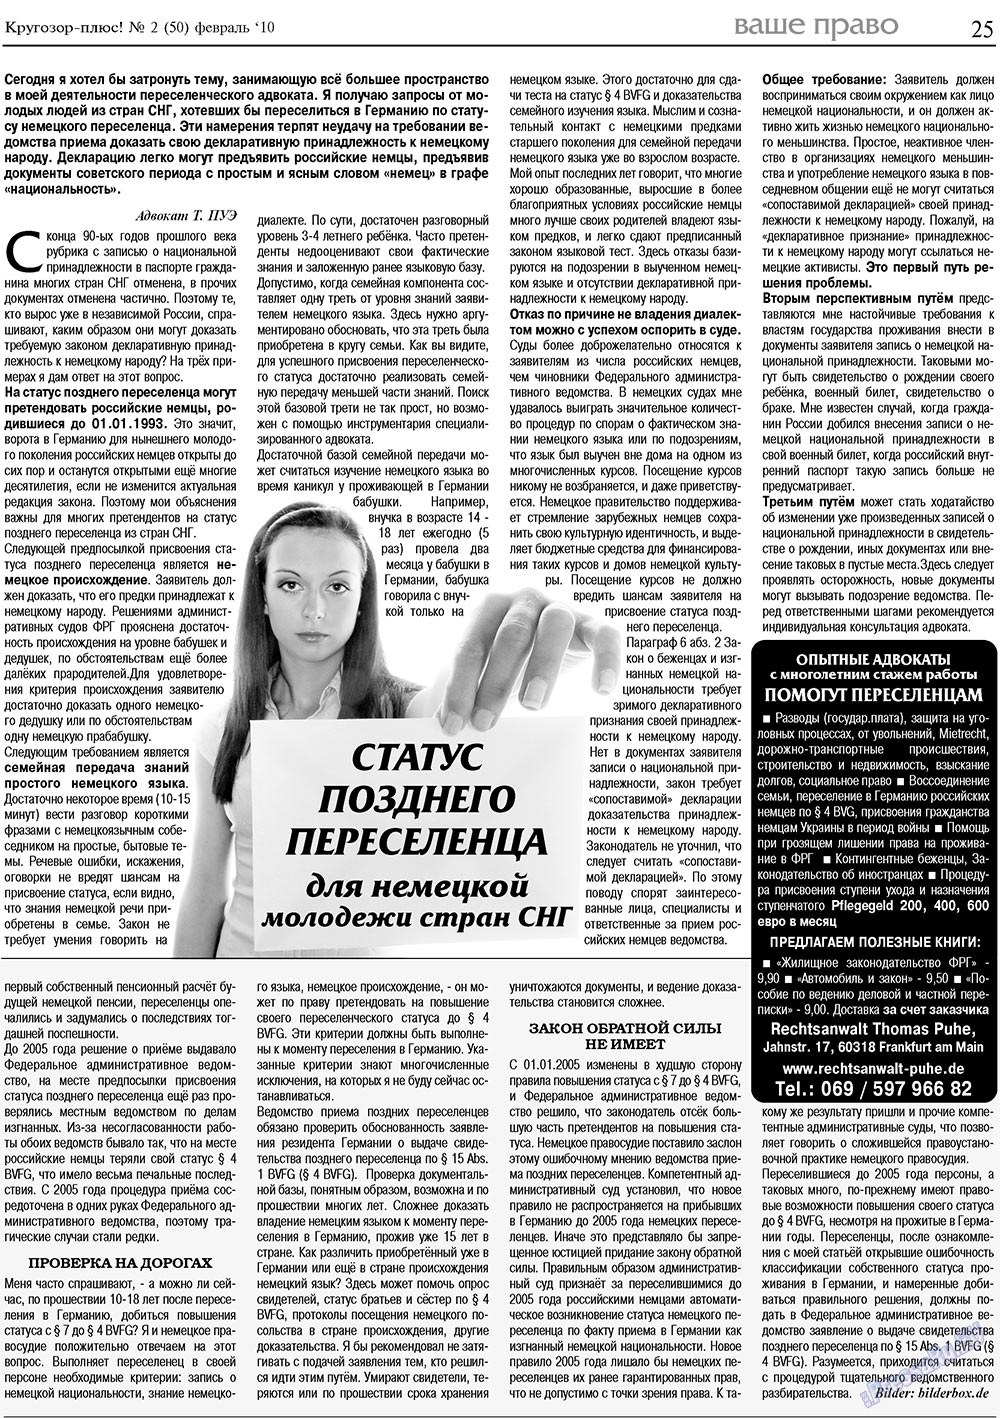 Кругозор плюс! (газета). 2010 год, номер 2, стр. 25